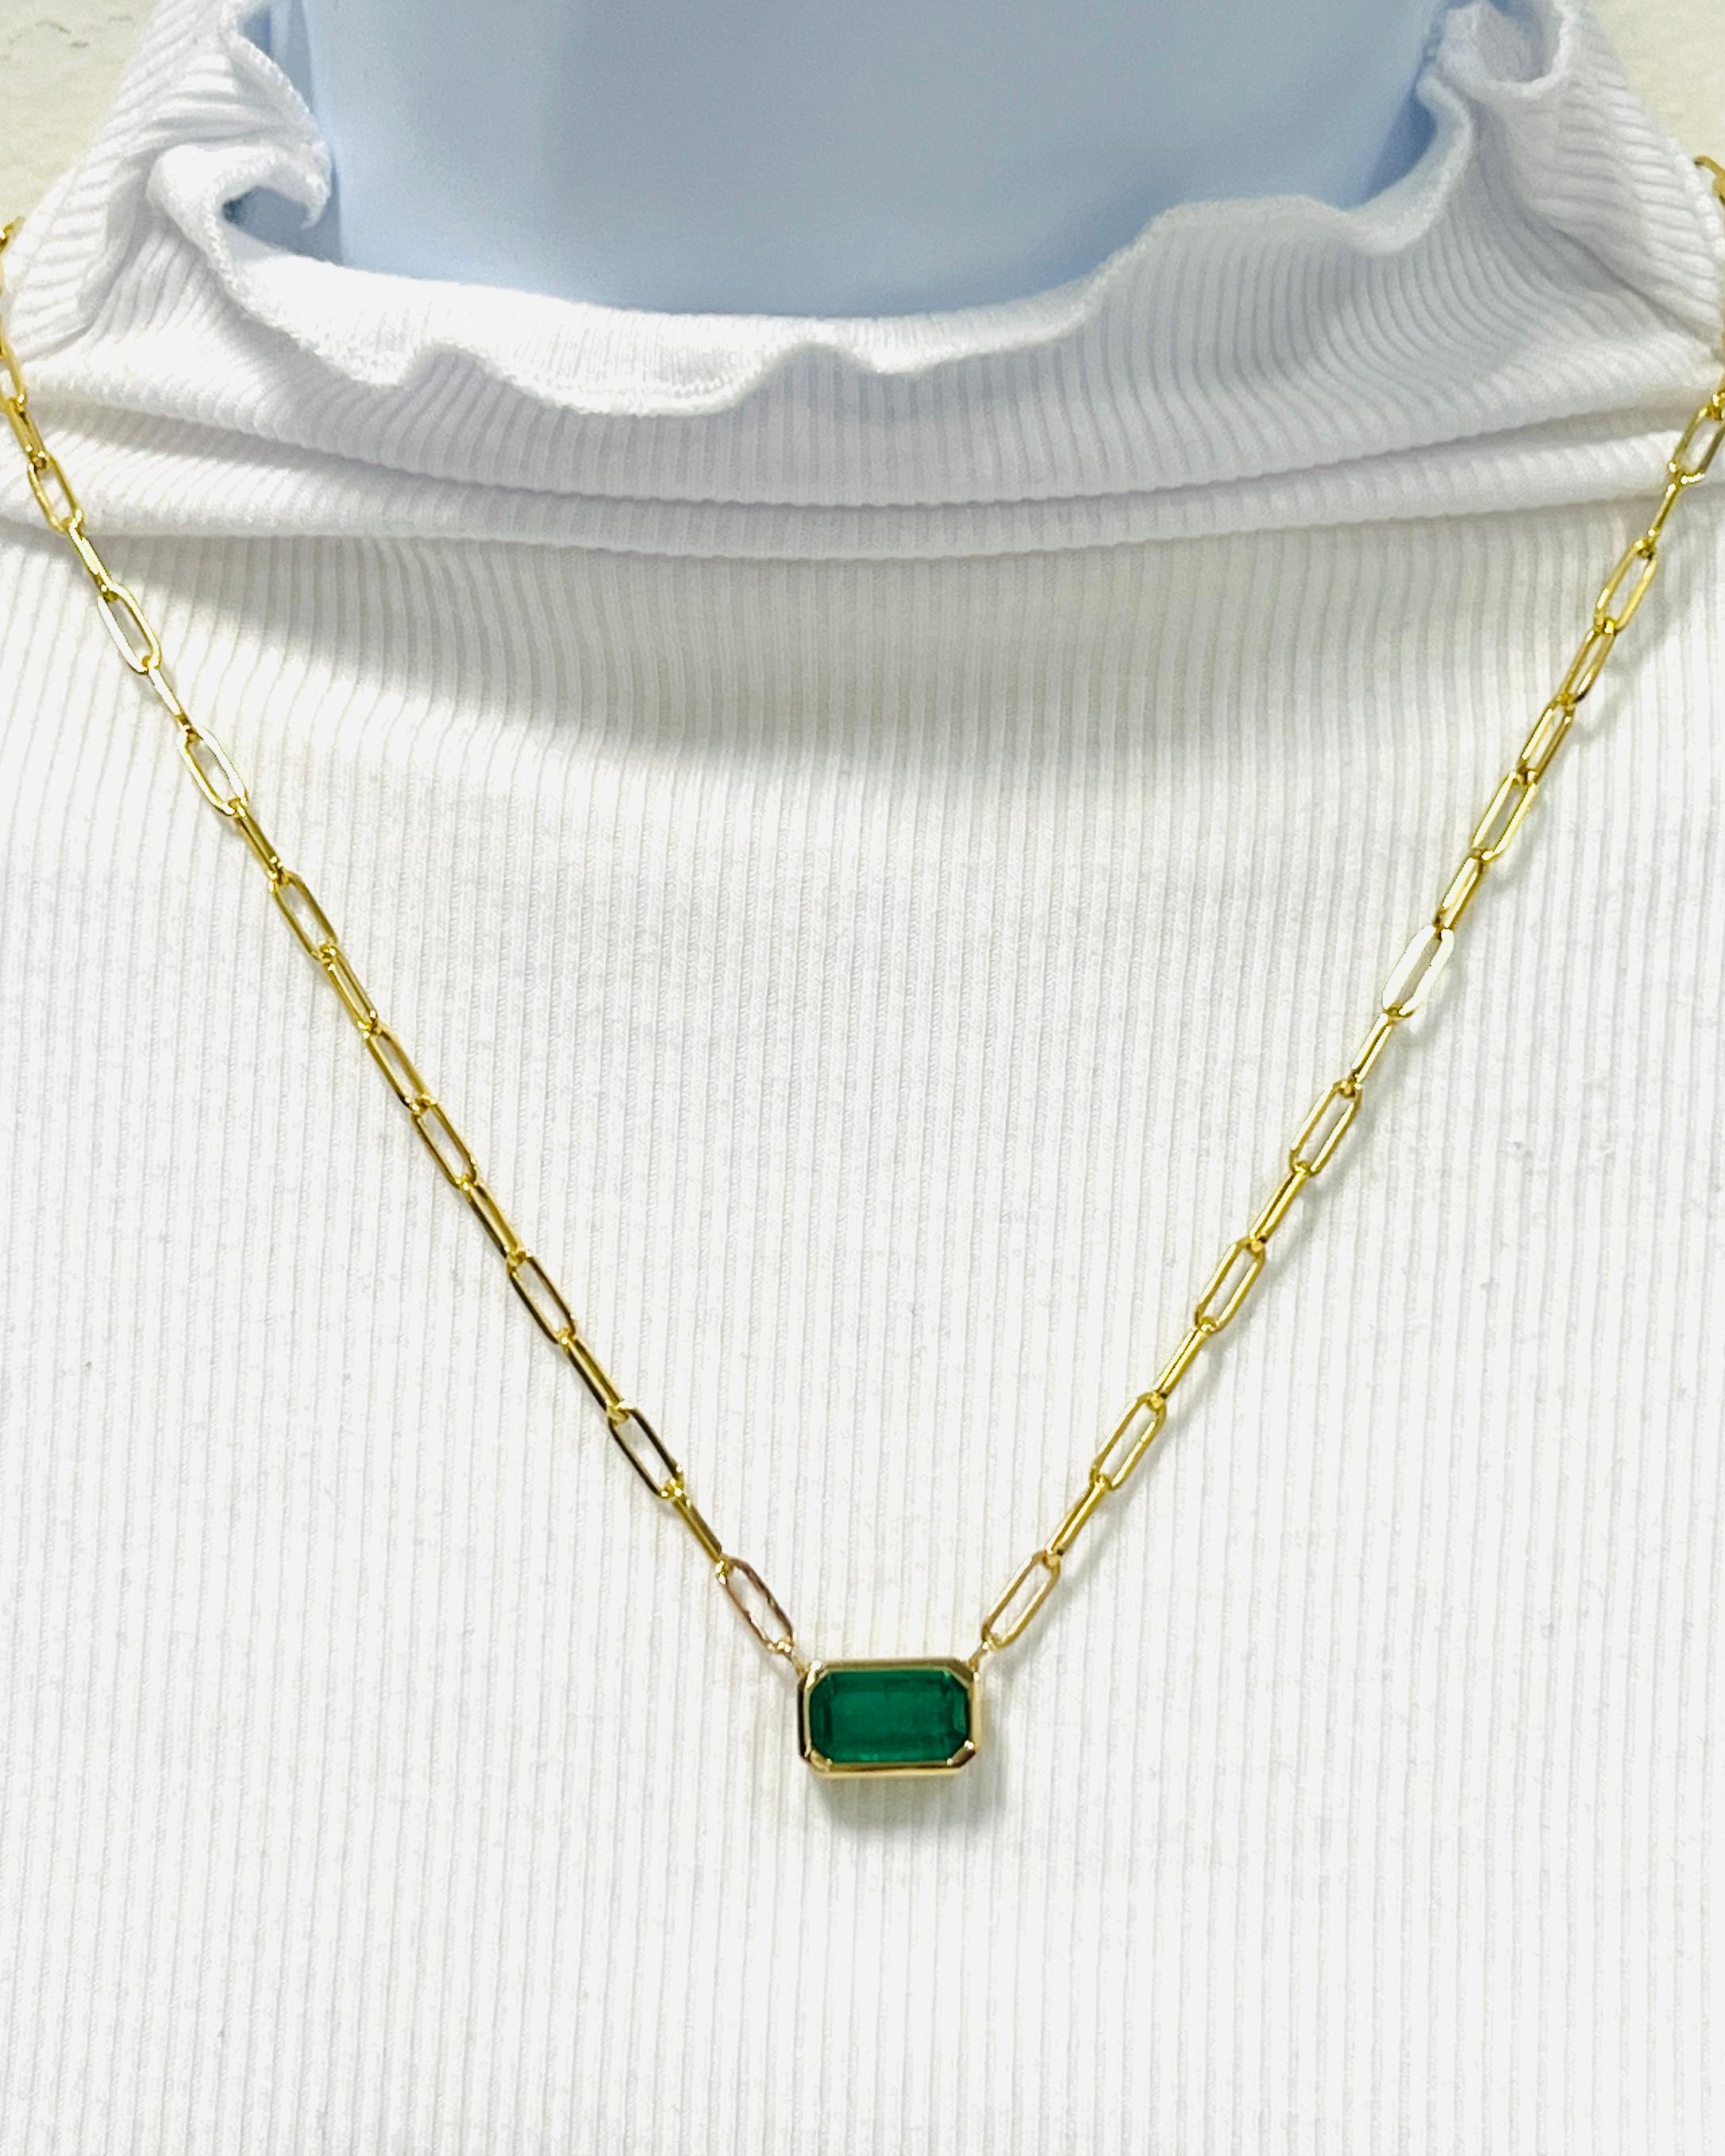 Beautiful 3.74 ct. emerald emerald cut in a handmade 14k yellow gold bezel.  Length is 21